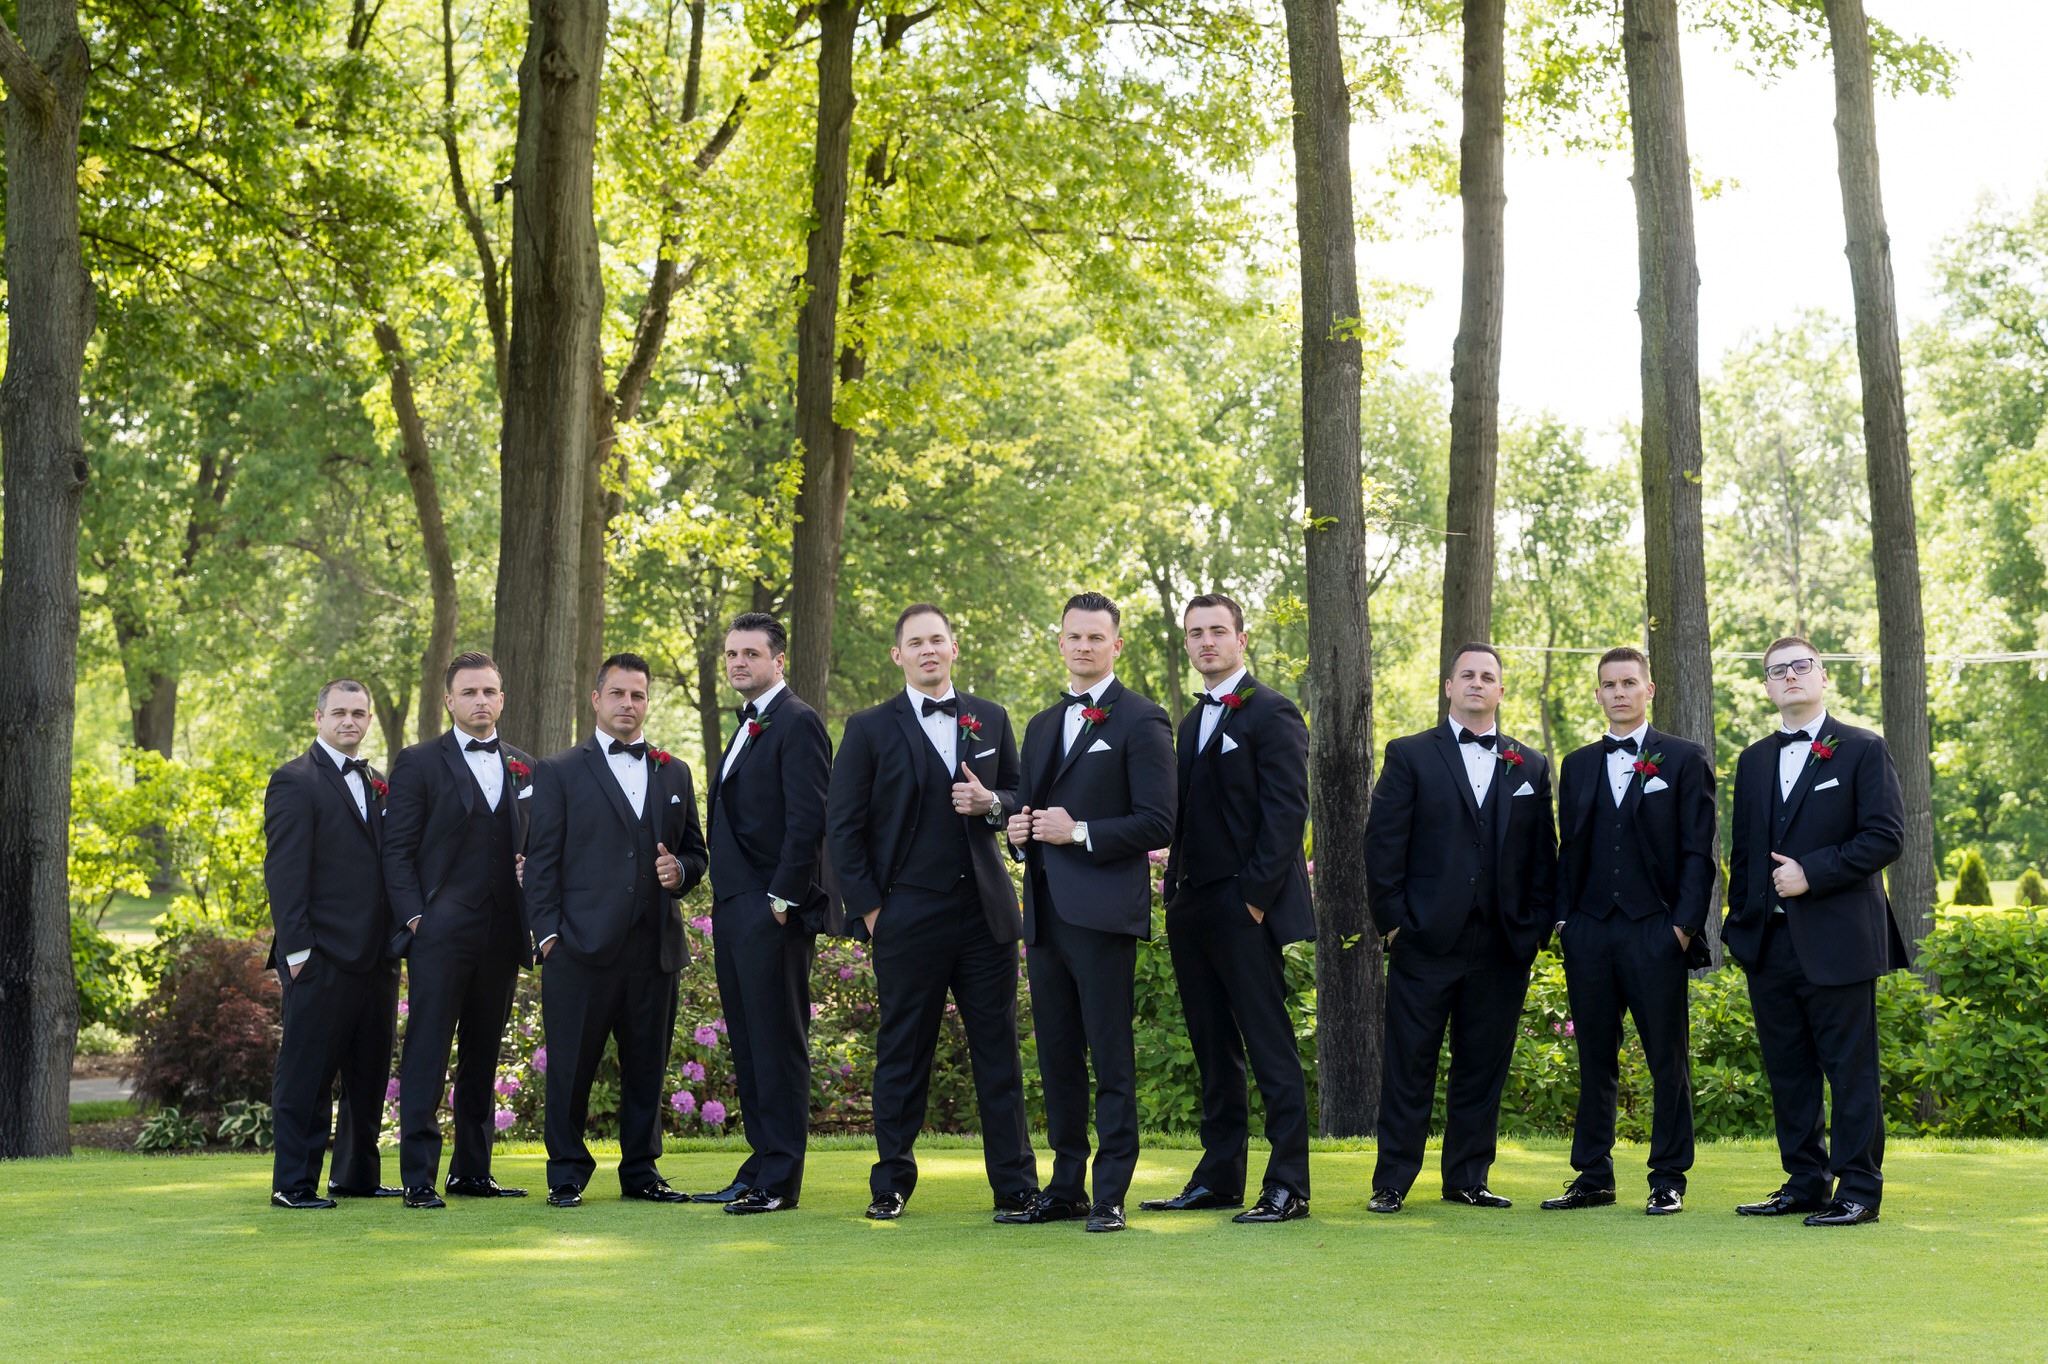 groomsmen, wearing classic black tuxedos pose